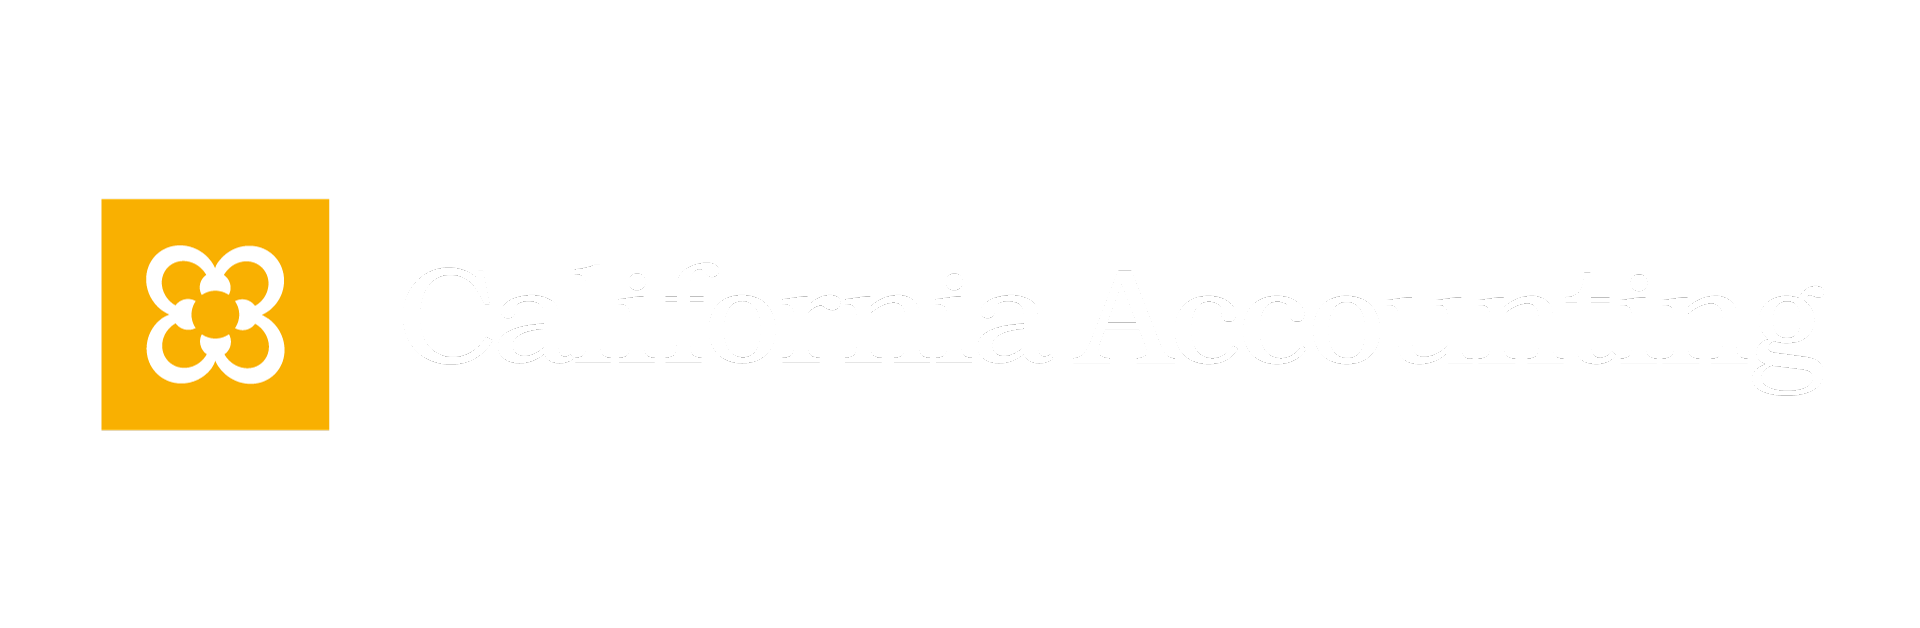 California Accounting